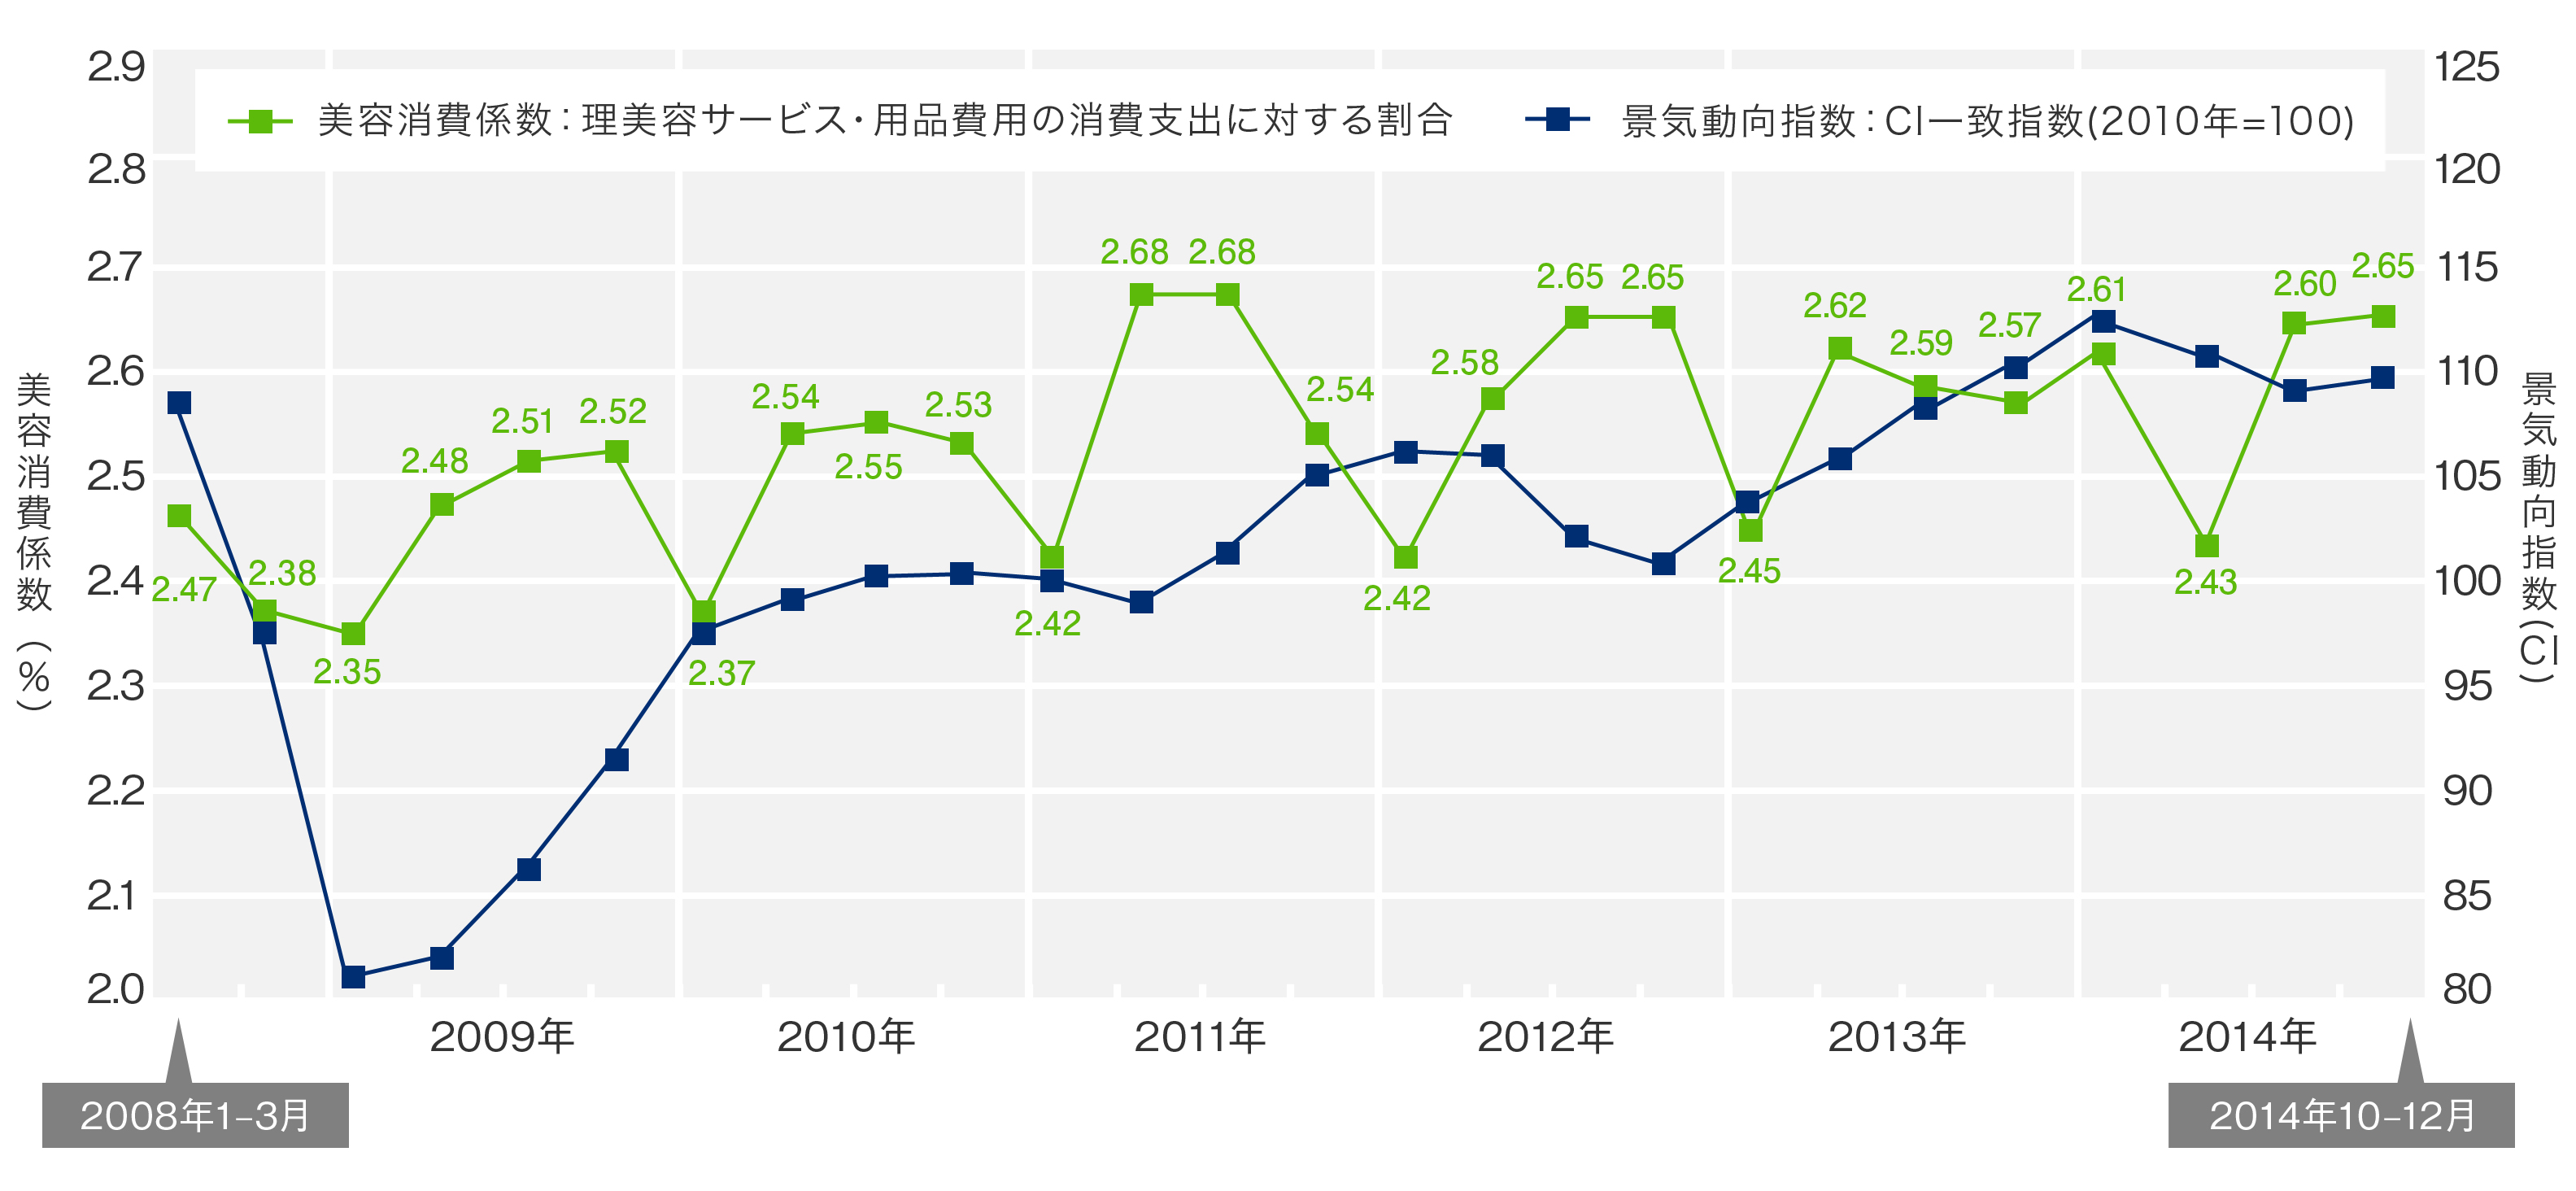 graph2014_10_12